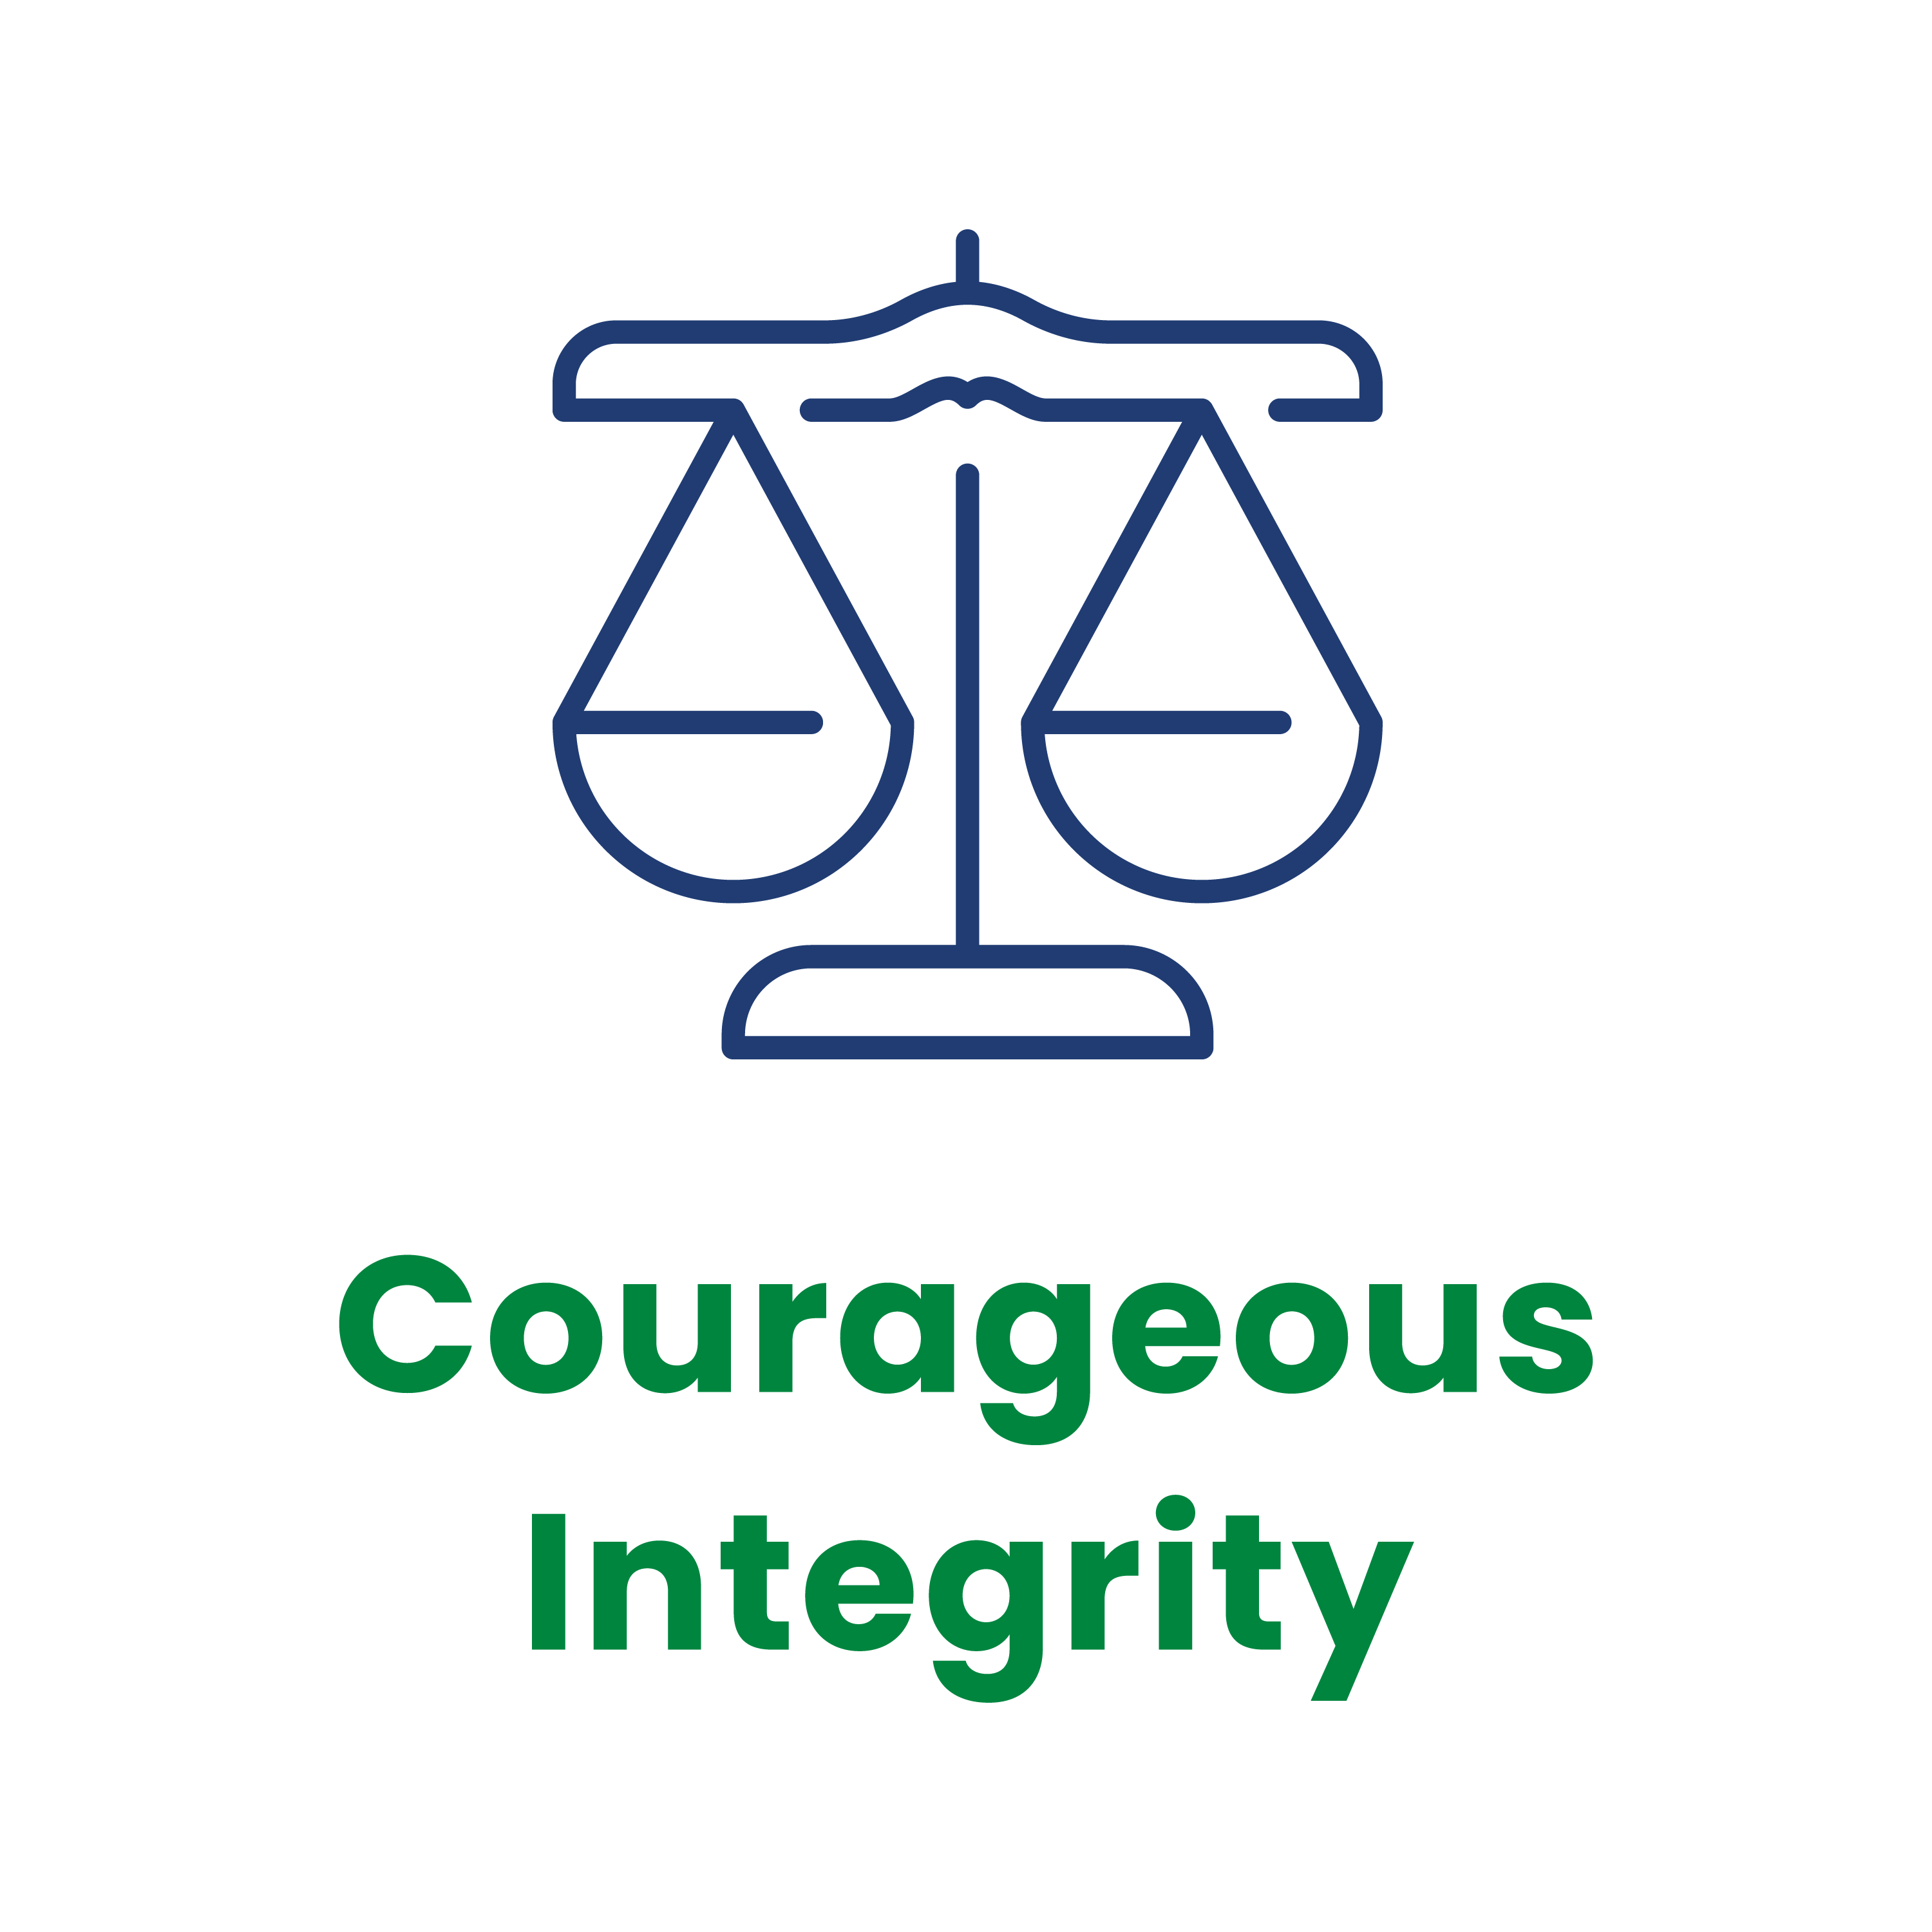 Values Logo - Courageous Integrity